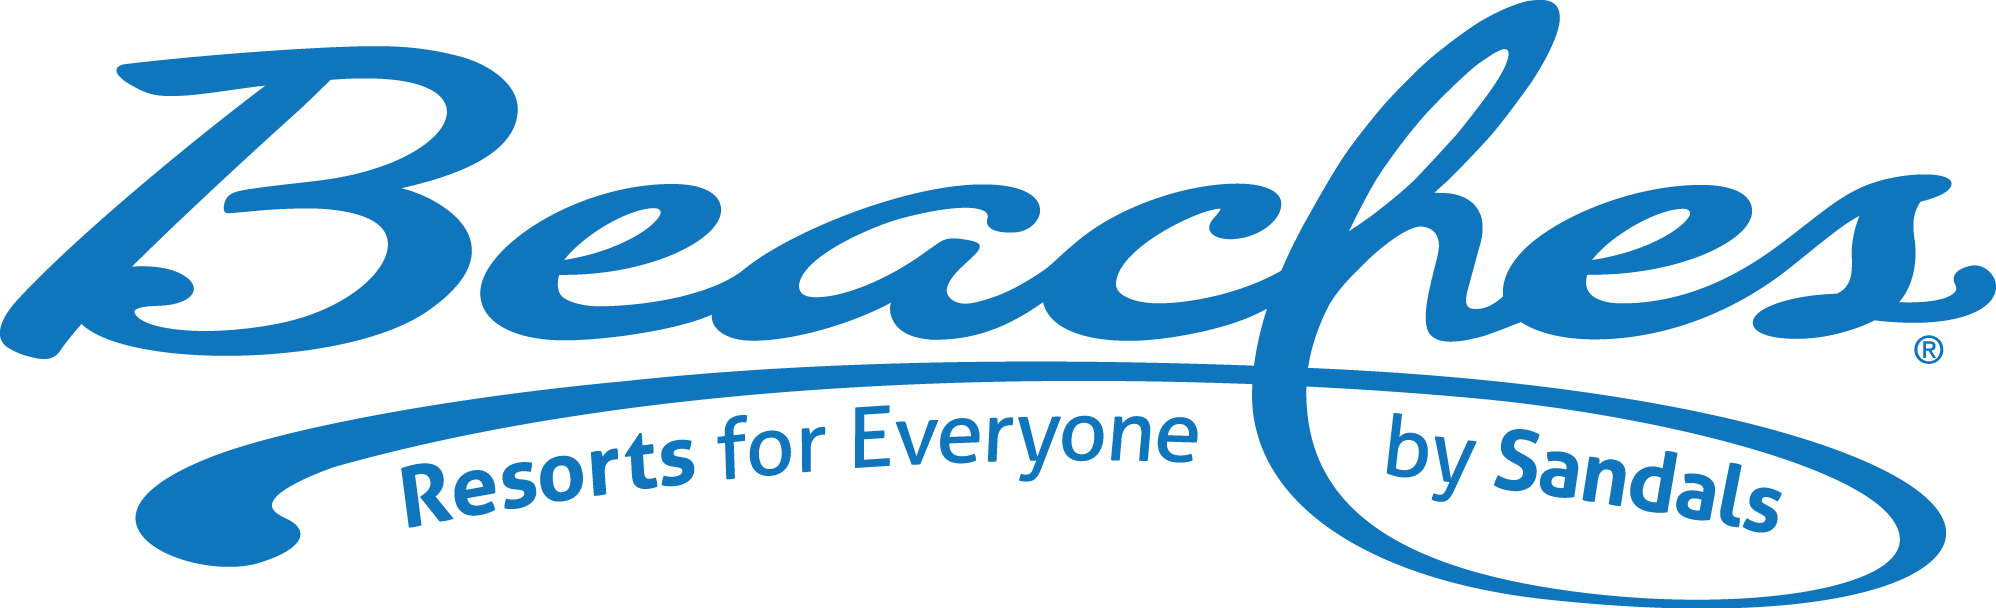 Beaches TCI Logo.png